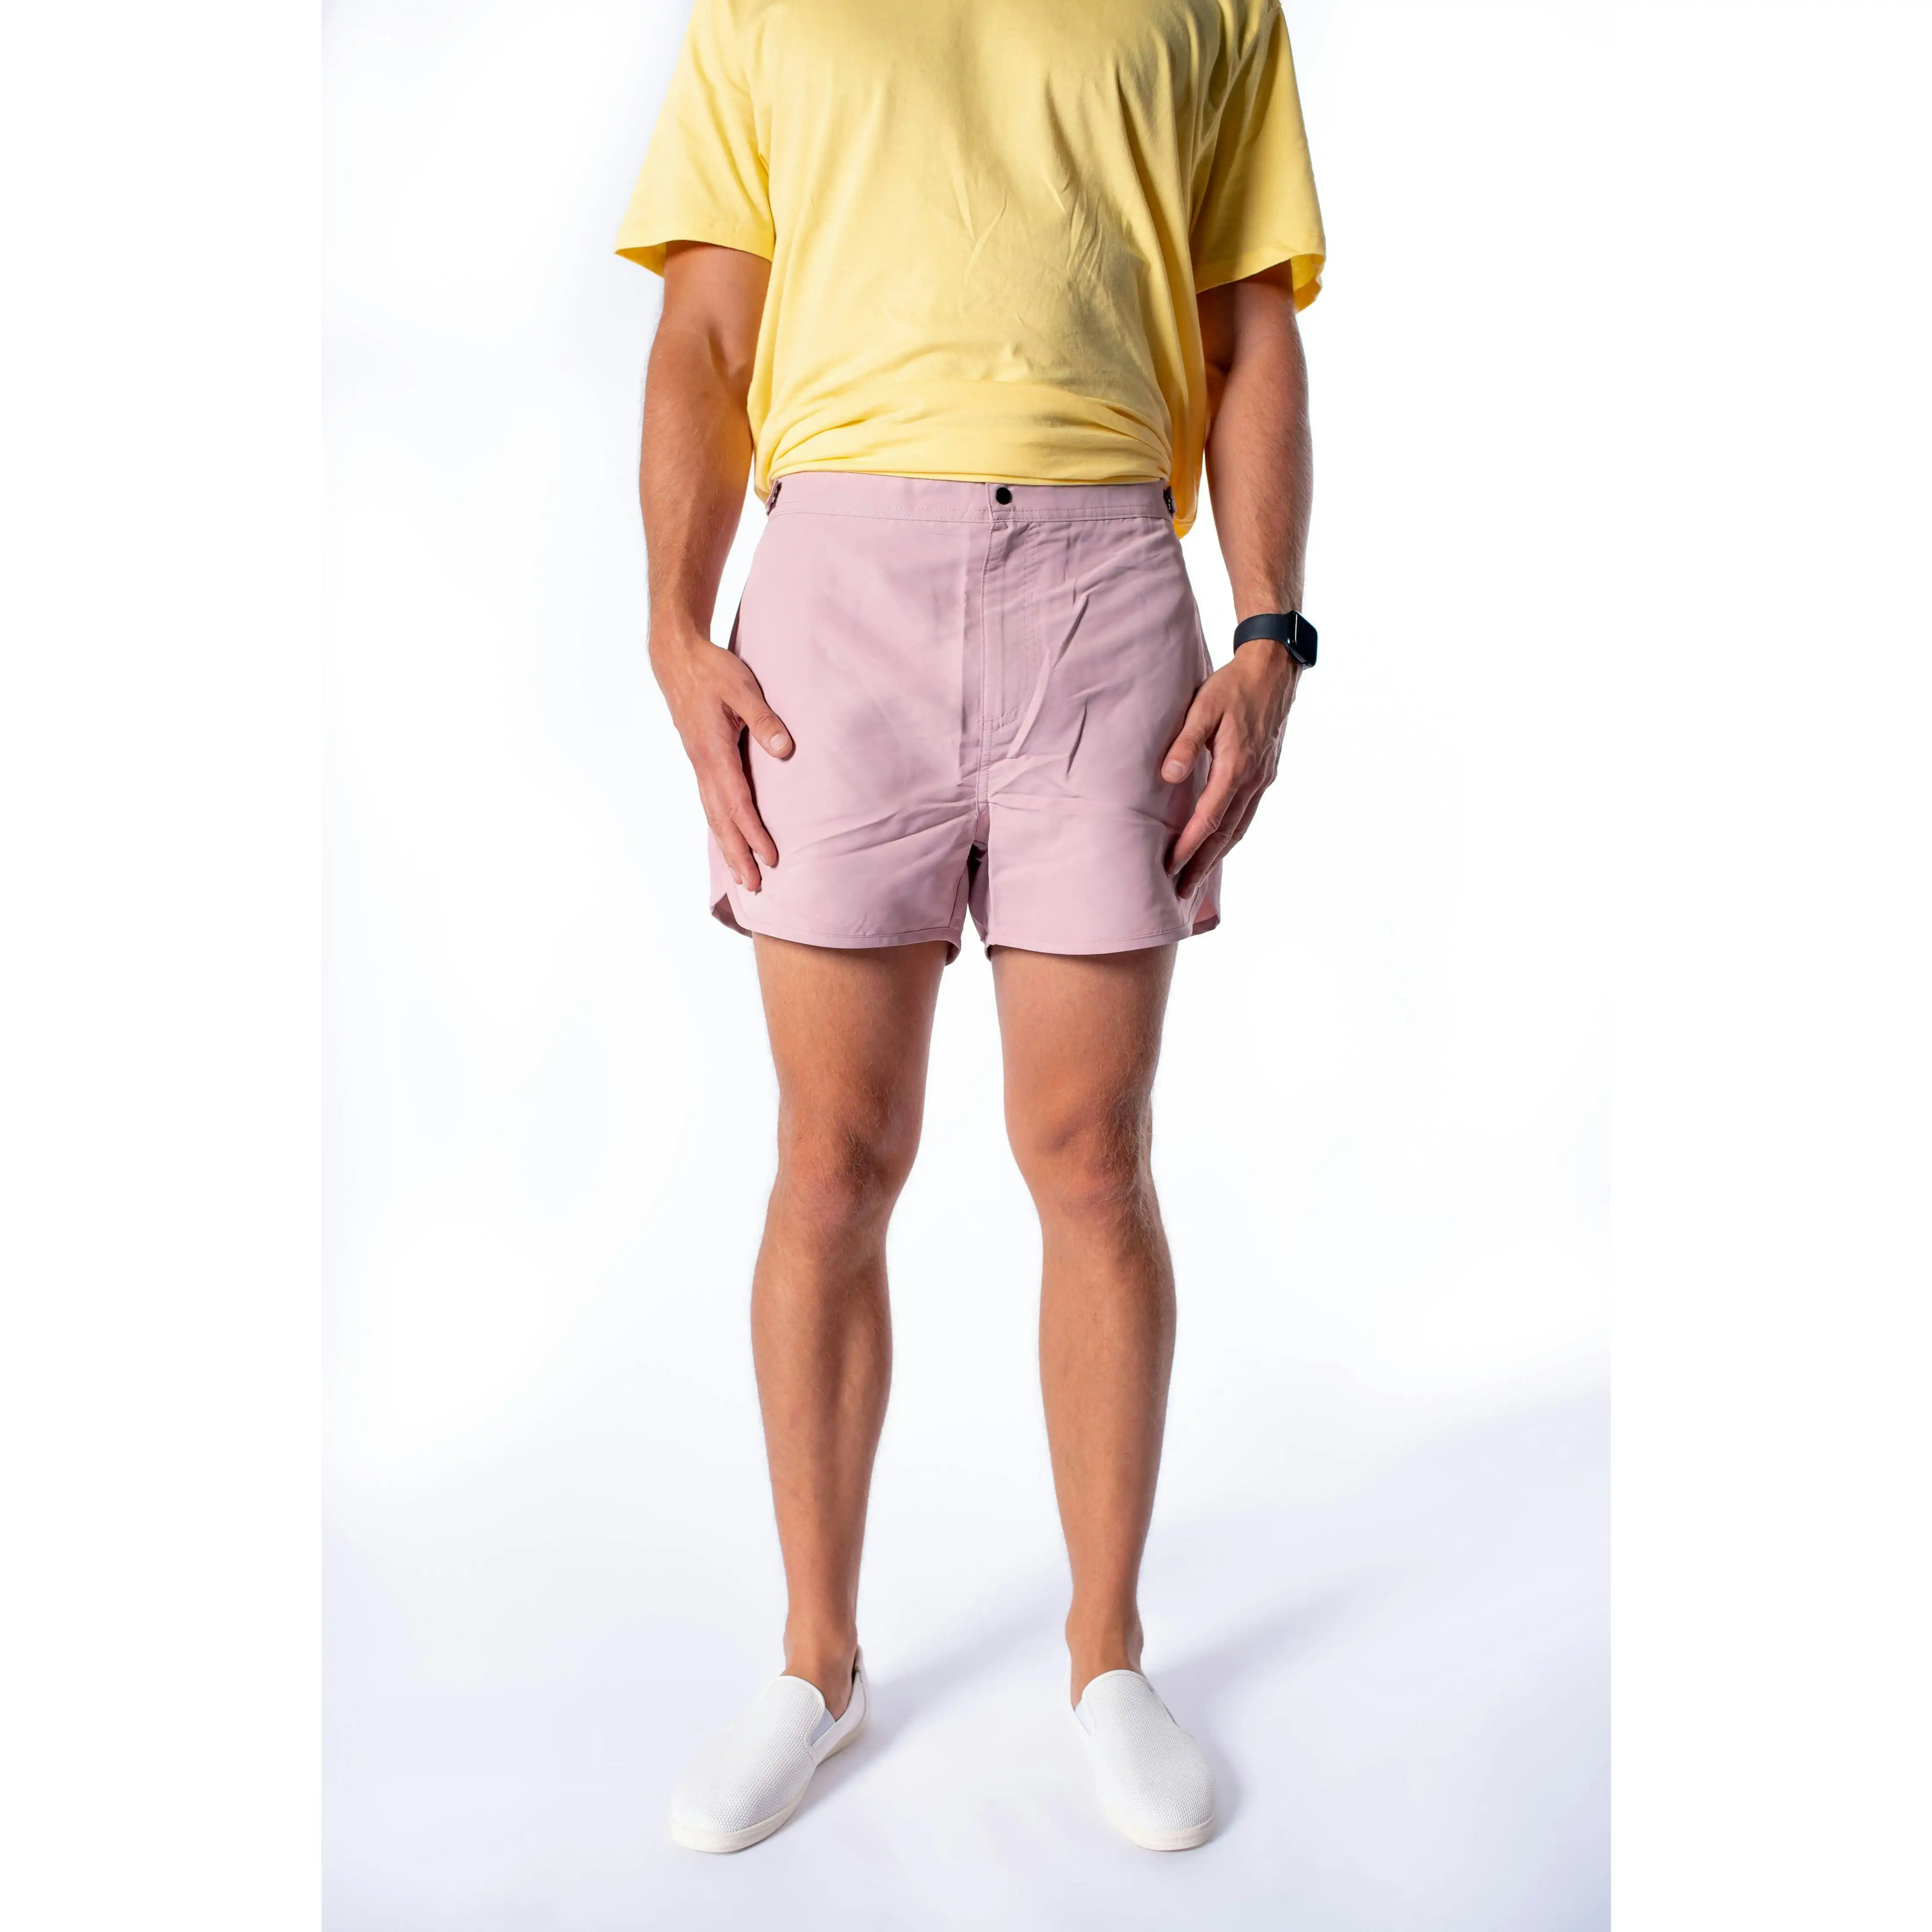 Topman Men's Swim Shorts - Pink